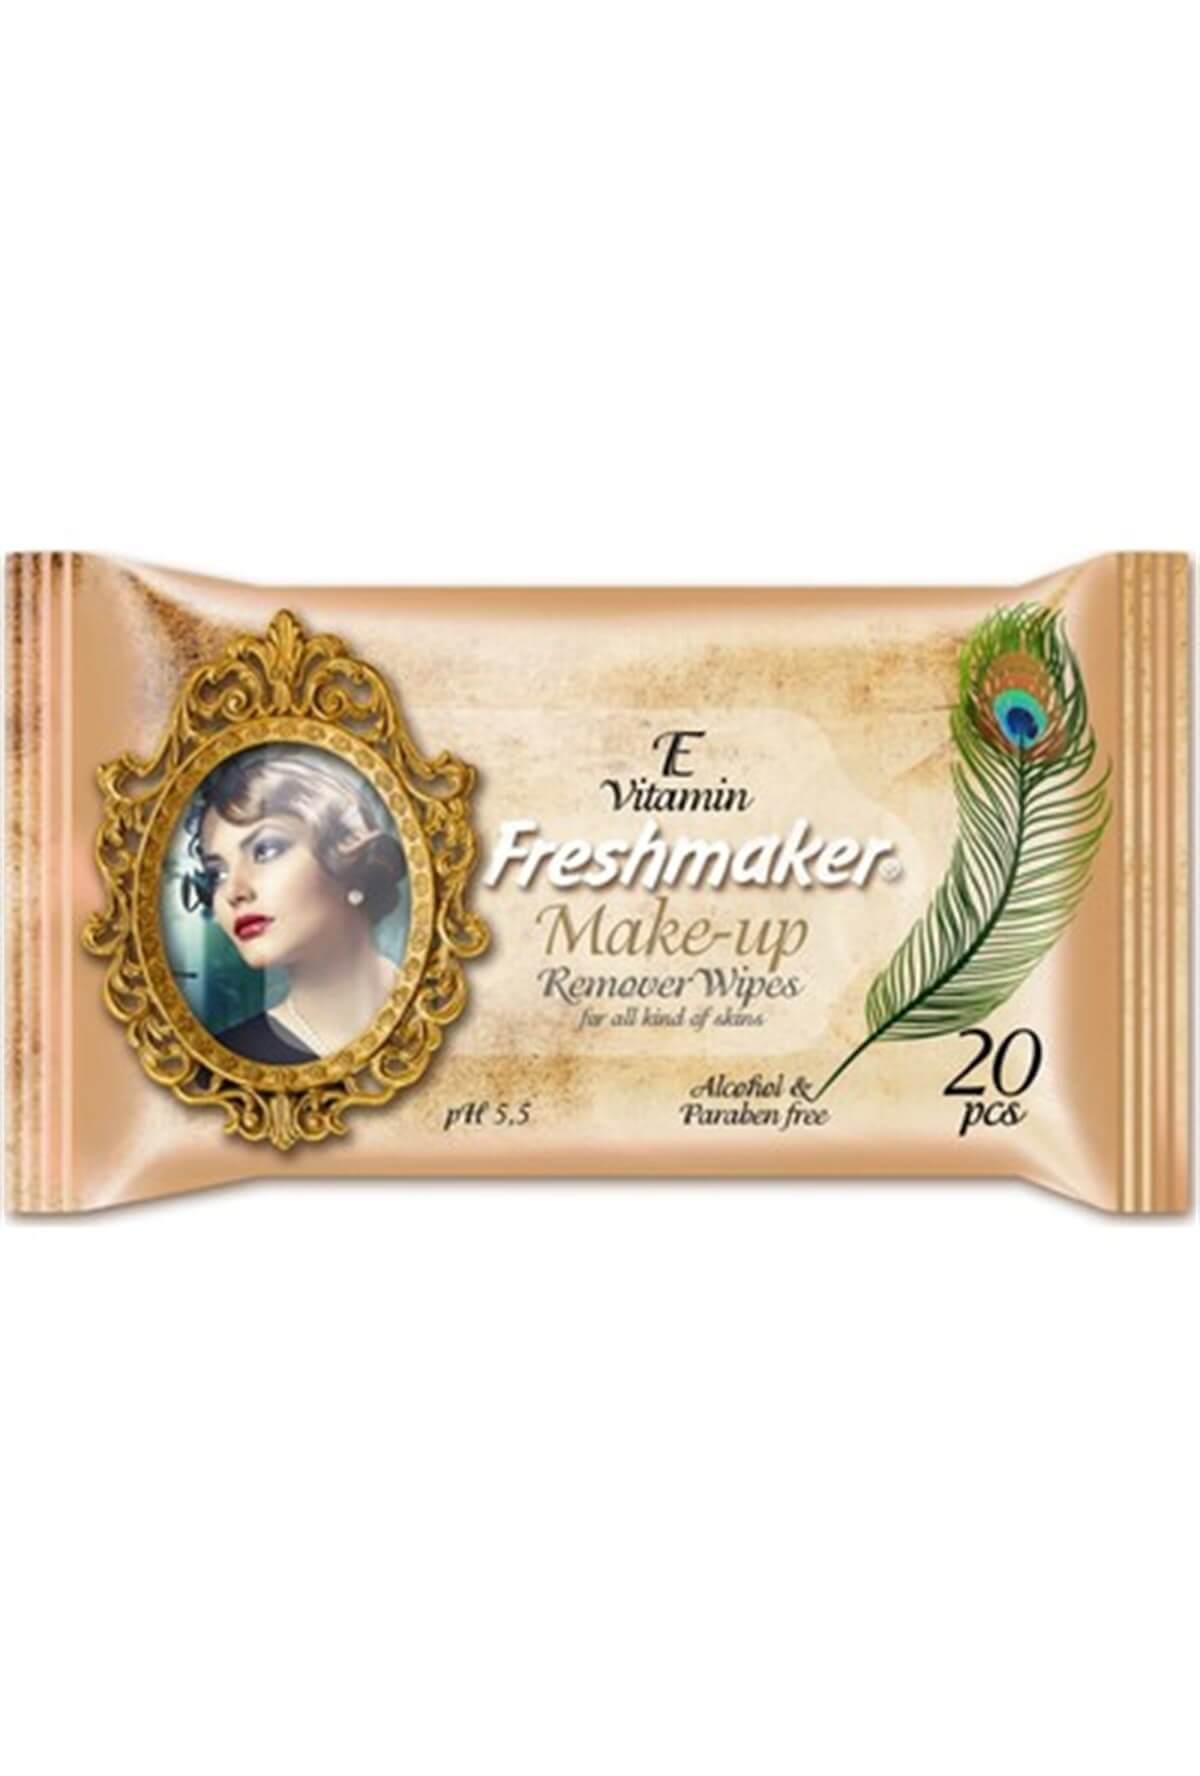 Freshmaker Make Up Makyaj Temizleme Mendilleri 20 Adet